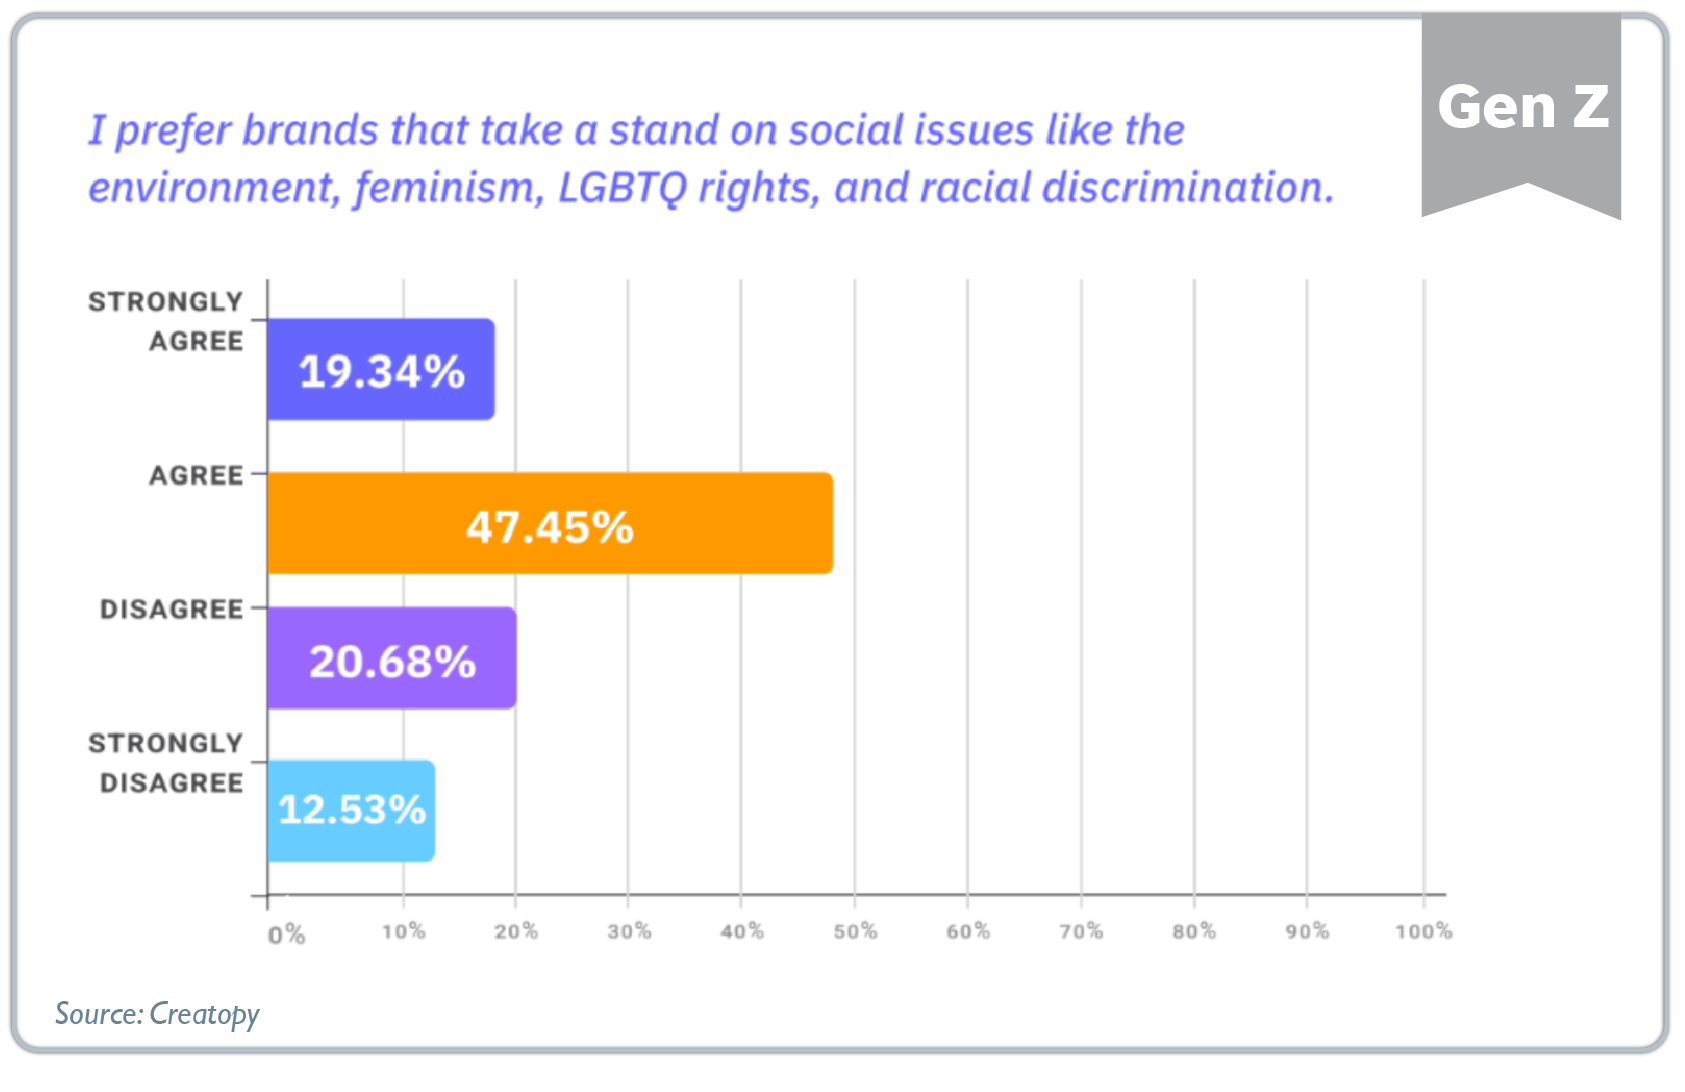 gen z characterstics - 68% prefer brands with social change values